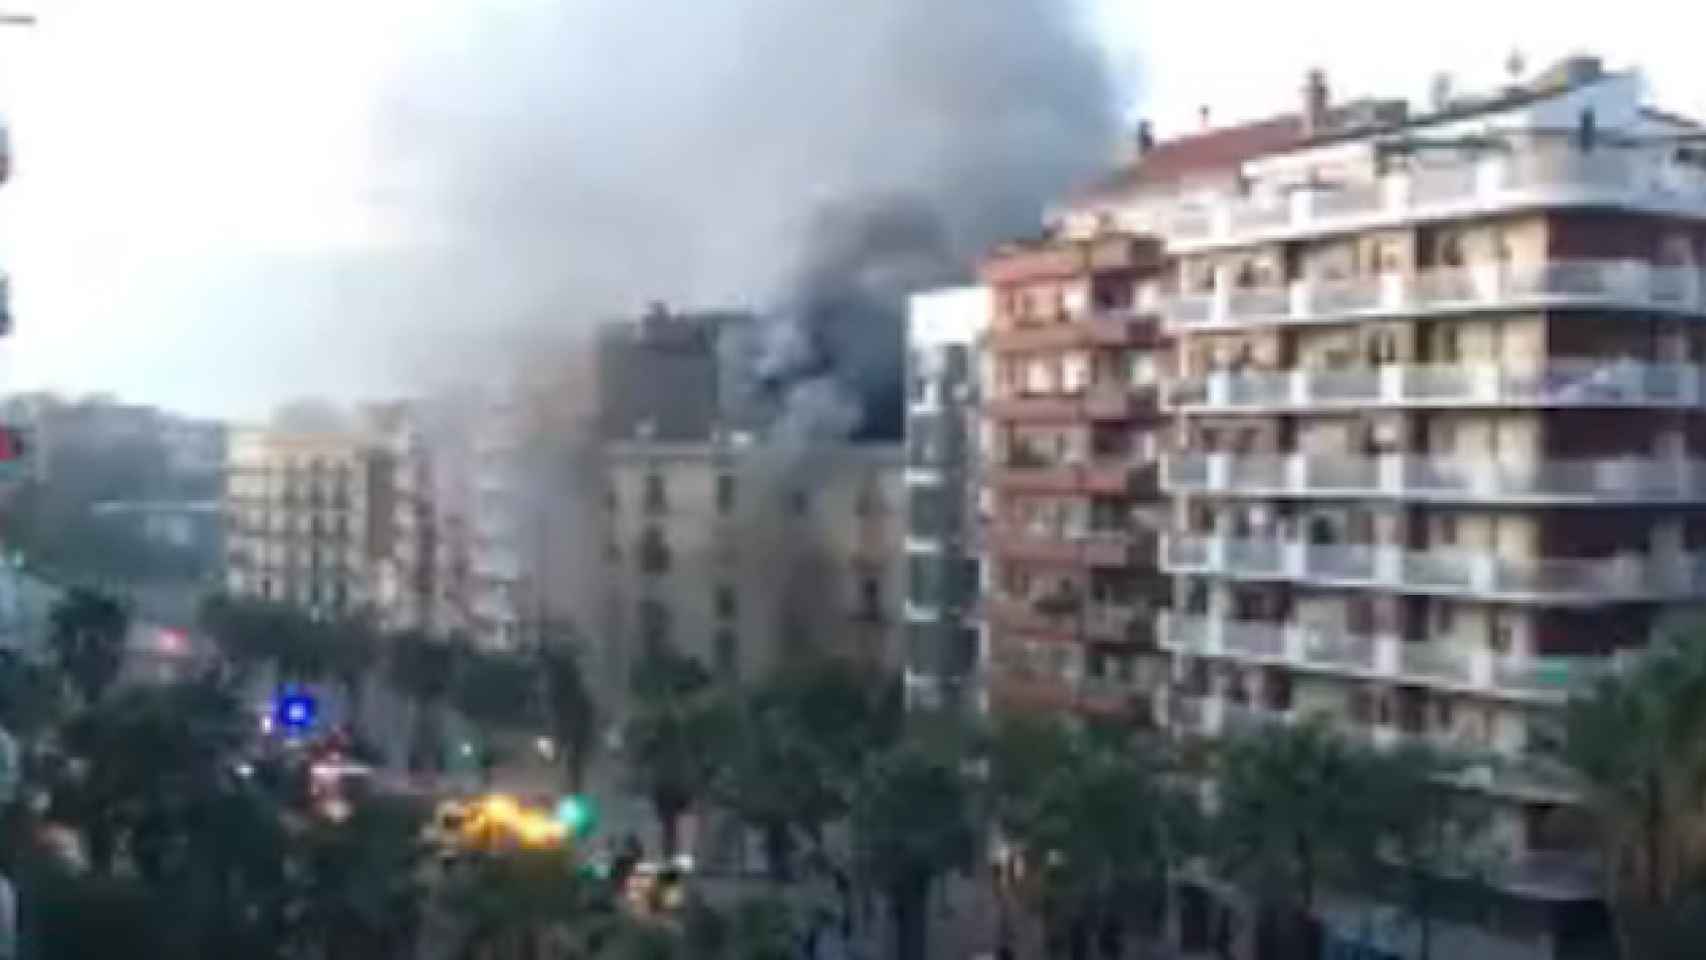 El incendio en el obrador de la calle Marina de Barcelona / Twitter